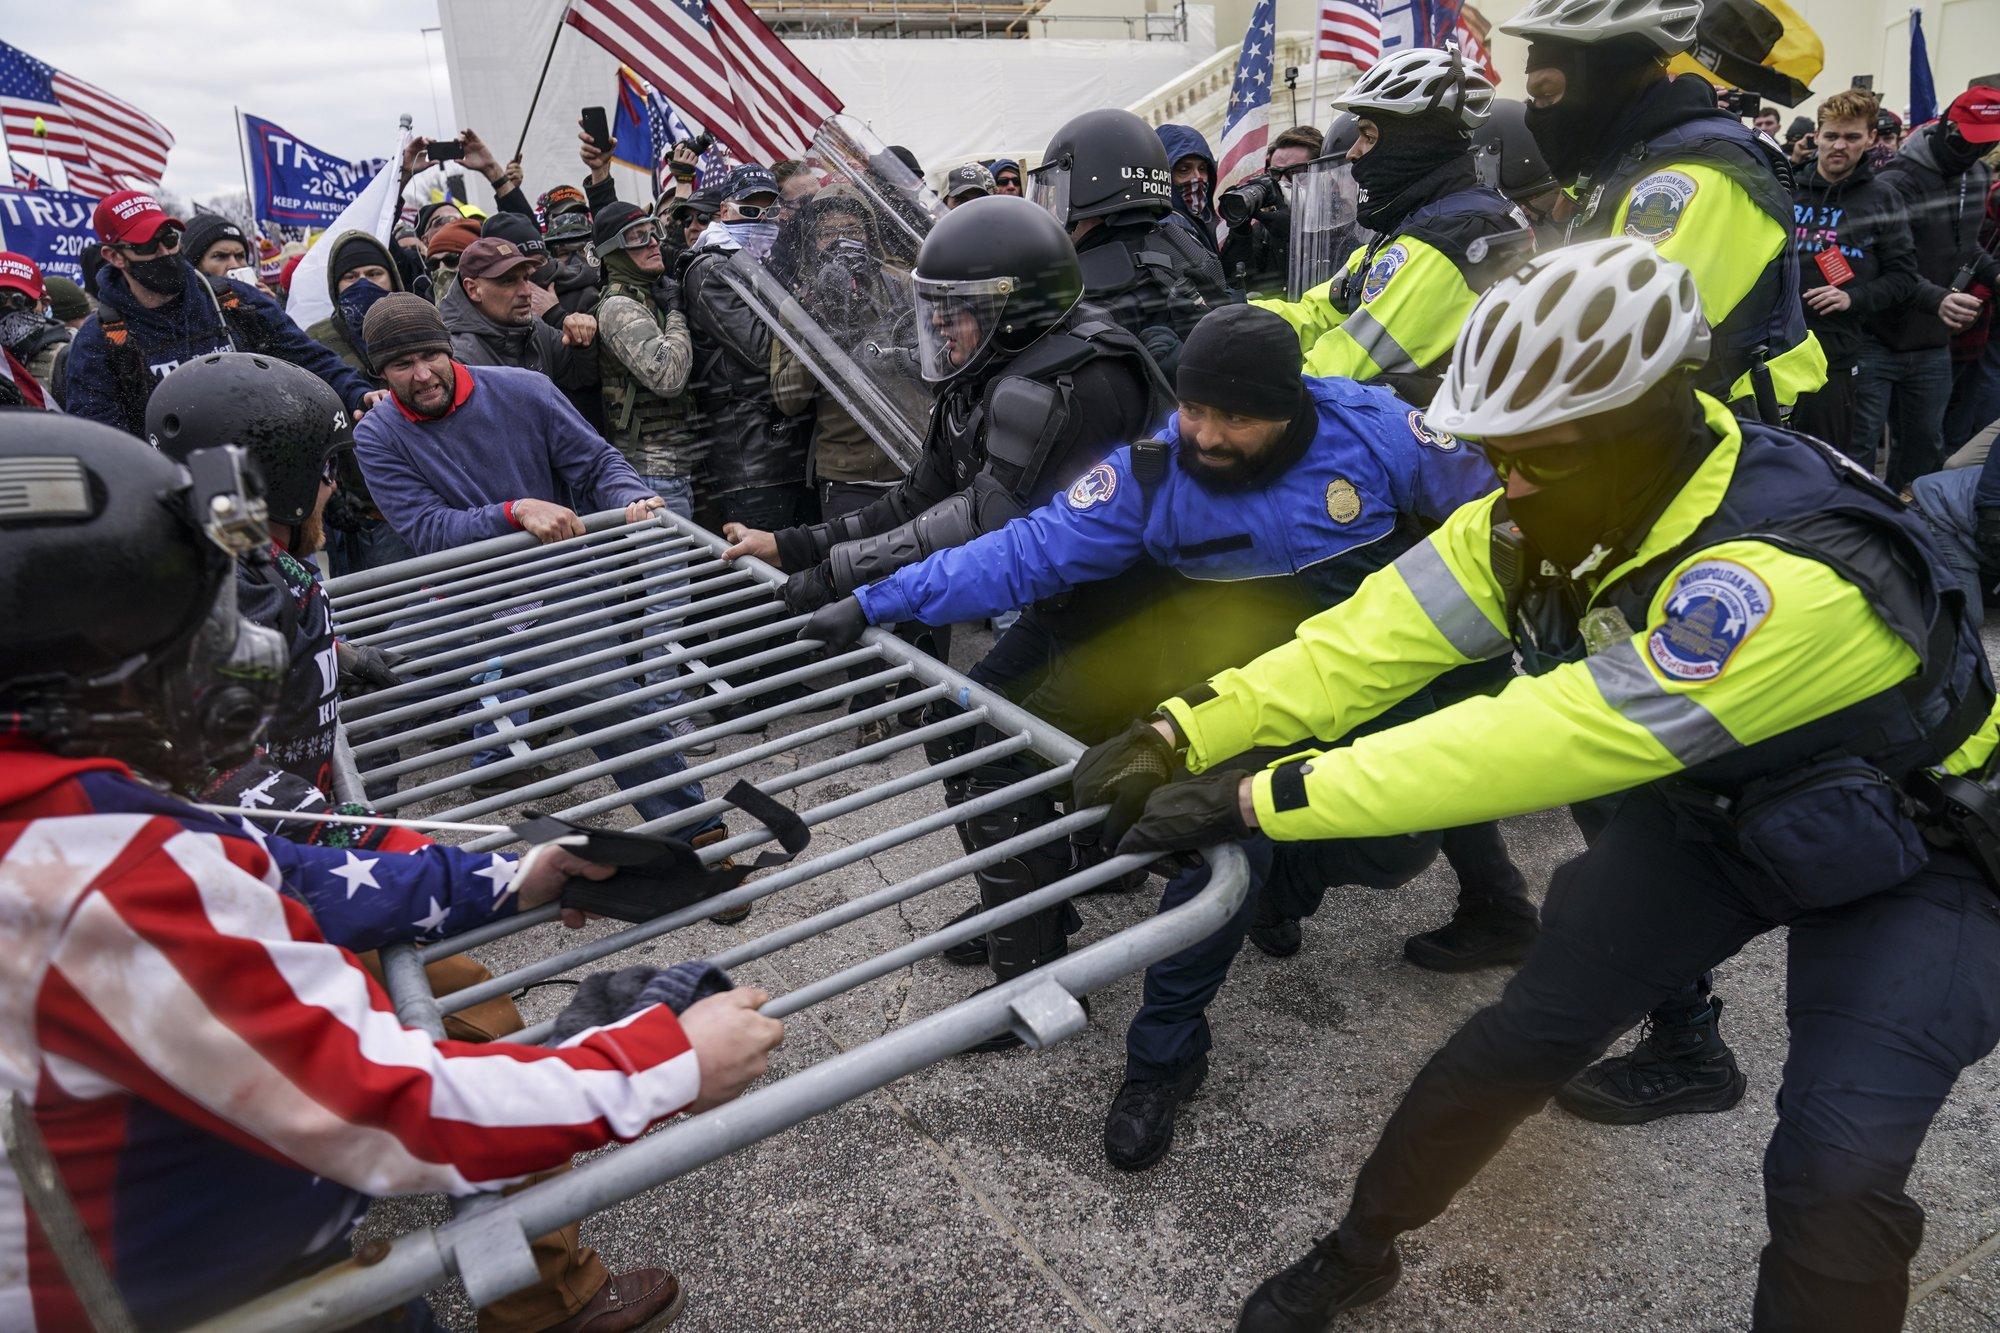 Scenes of violence at U.S. Capitol shock world - AP PHOTOS